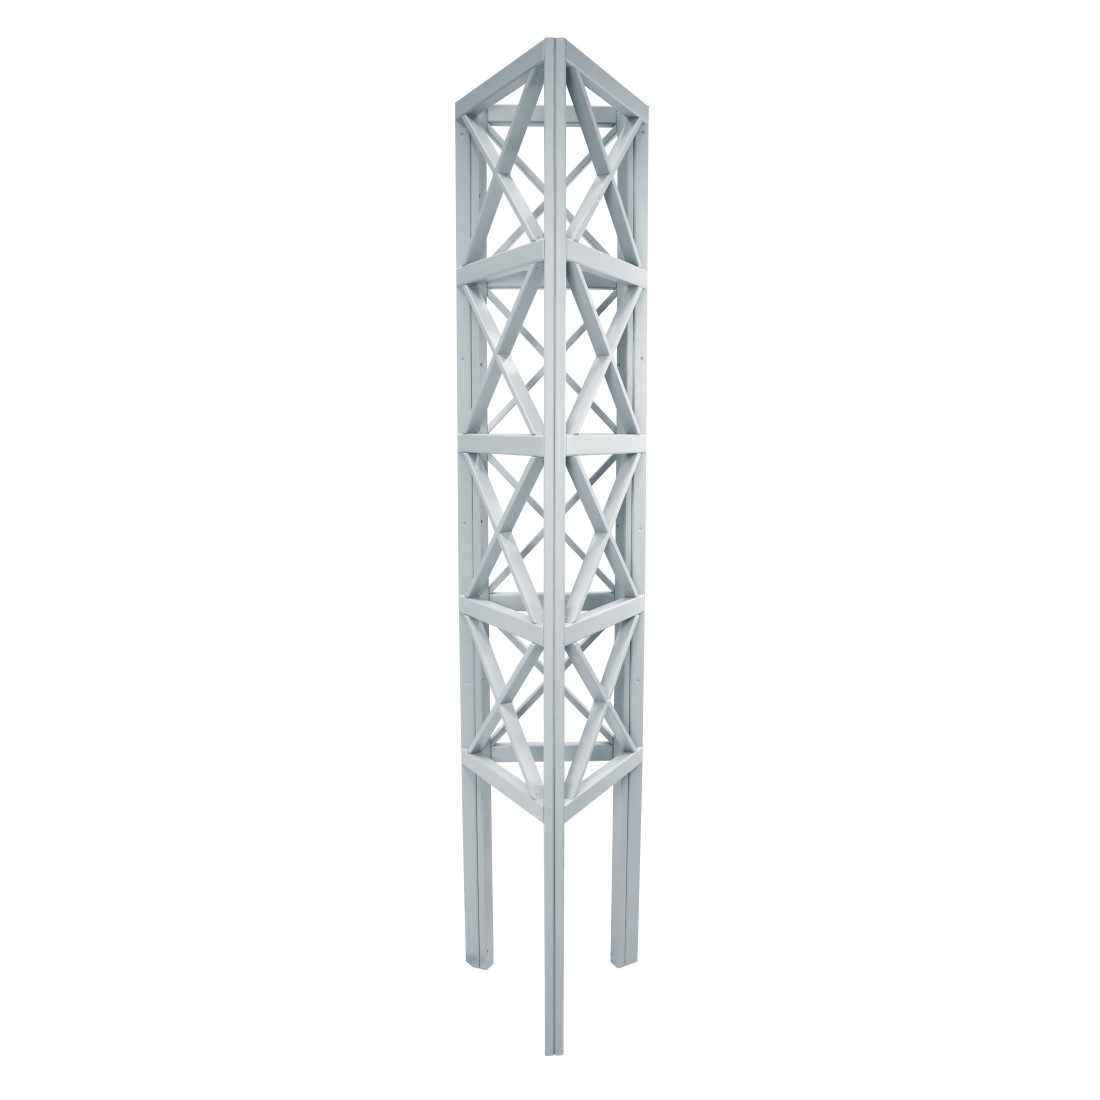 RHS Prestige Triangular Cross Detail Wooden Tower Obelisk